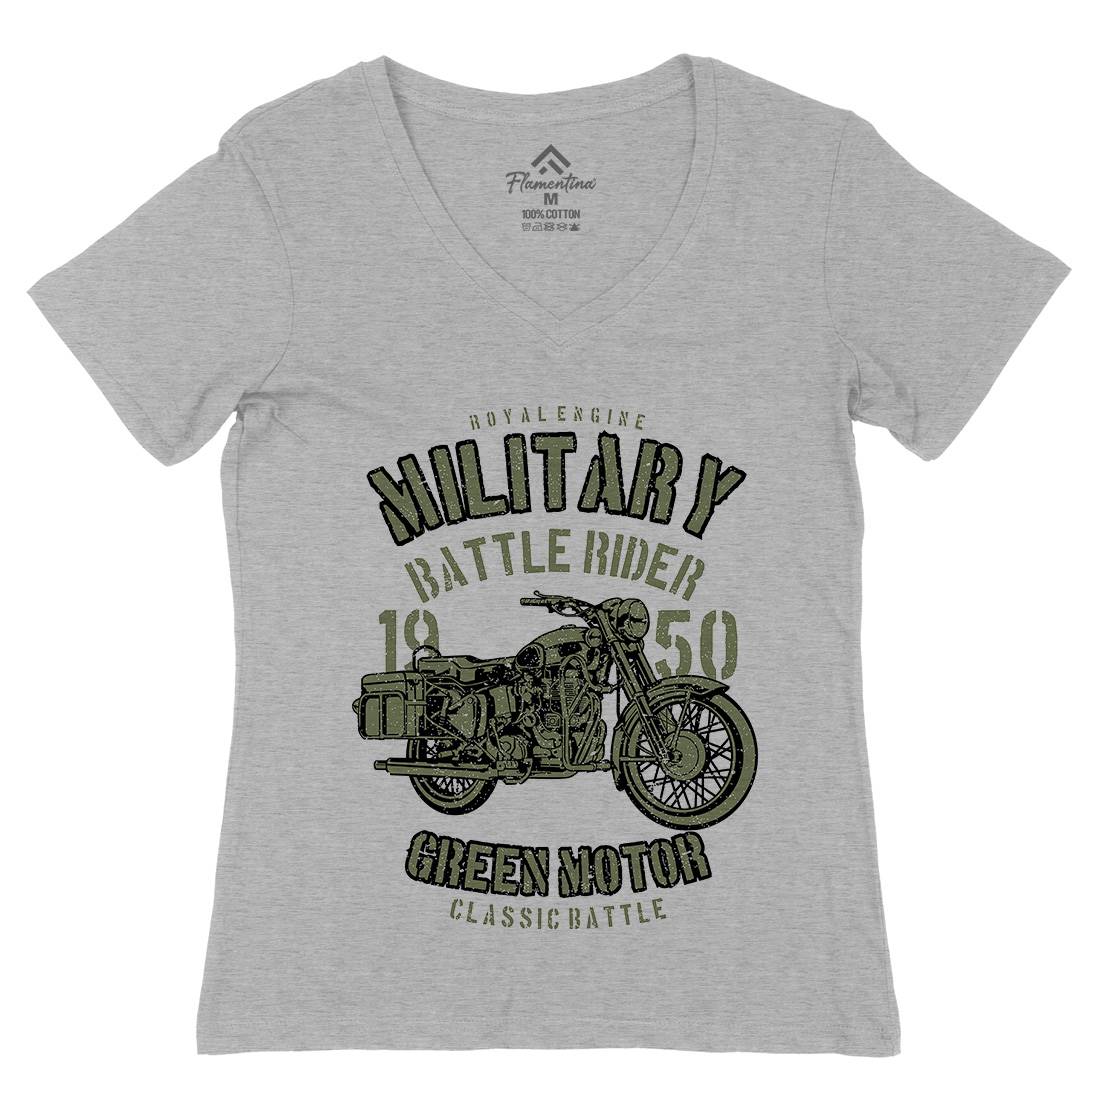 Green Military Ride Womens Organic V-Neck T-Shirt Army A678